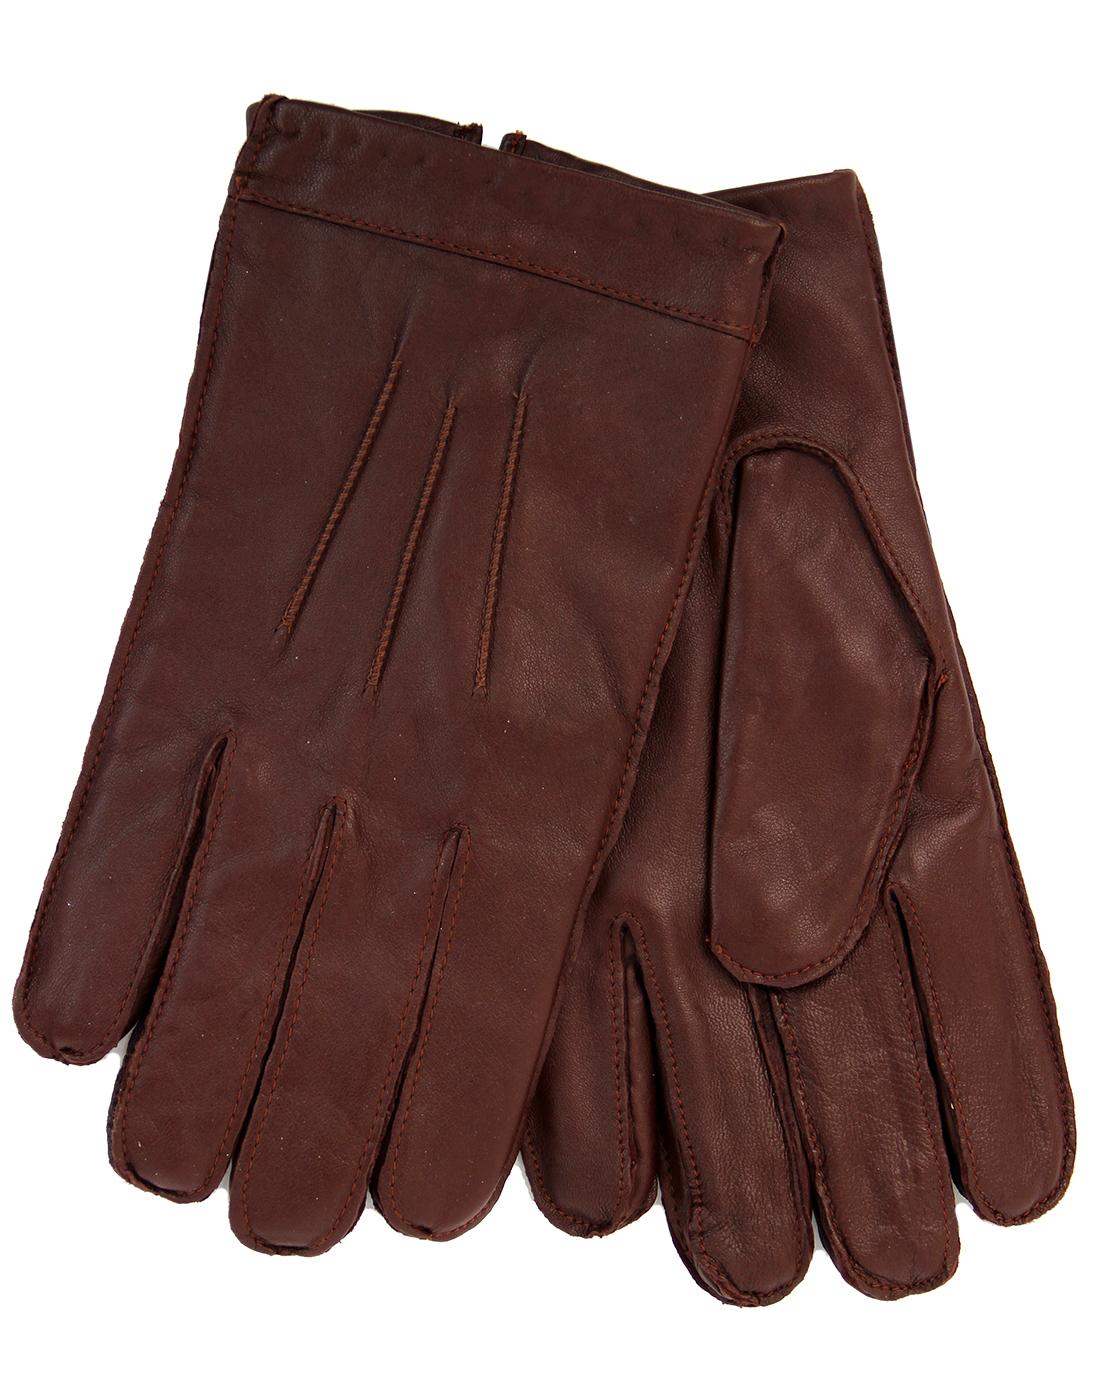 GIBSON LONDON Men's Retro Cognac Leather Gloves